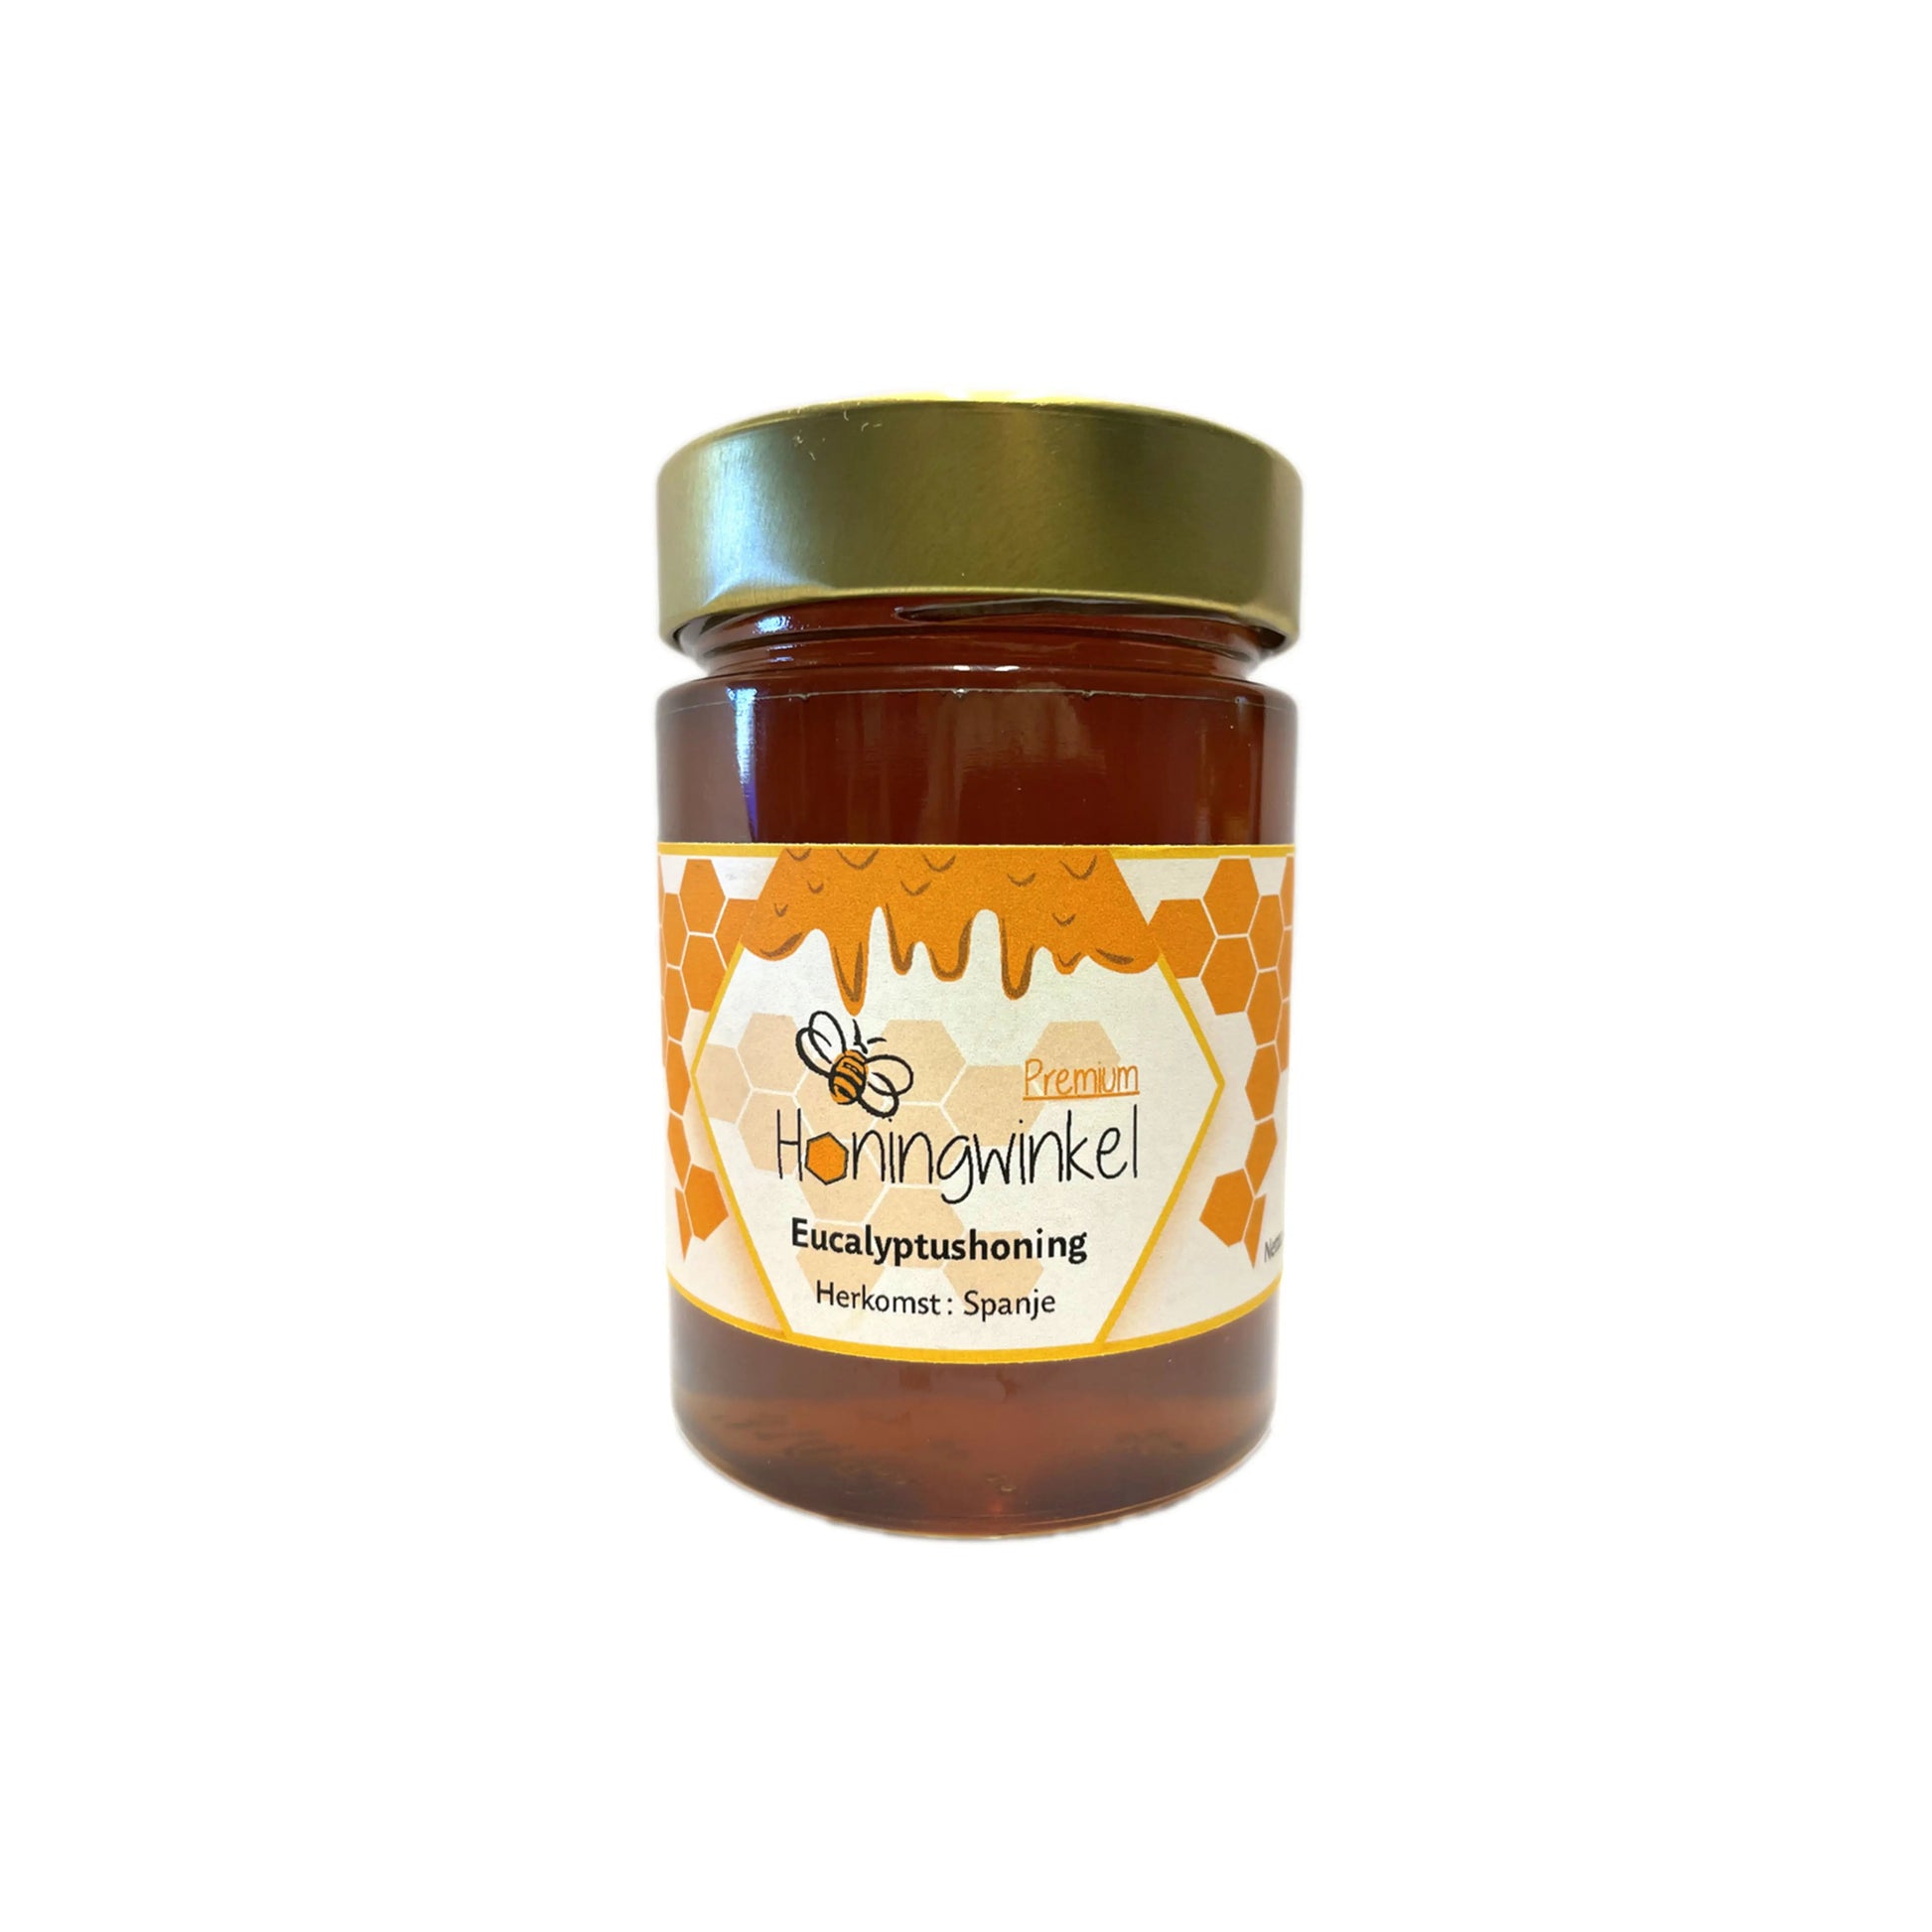 Premium eucalyptushoning Spanje 450g Honingwinkel (vloeibaar) - Honingwinkel